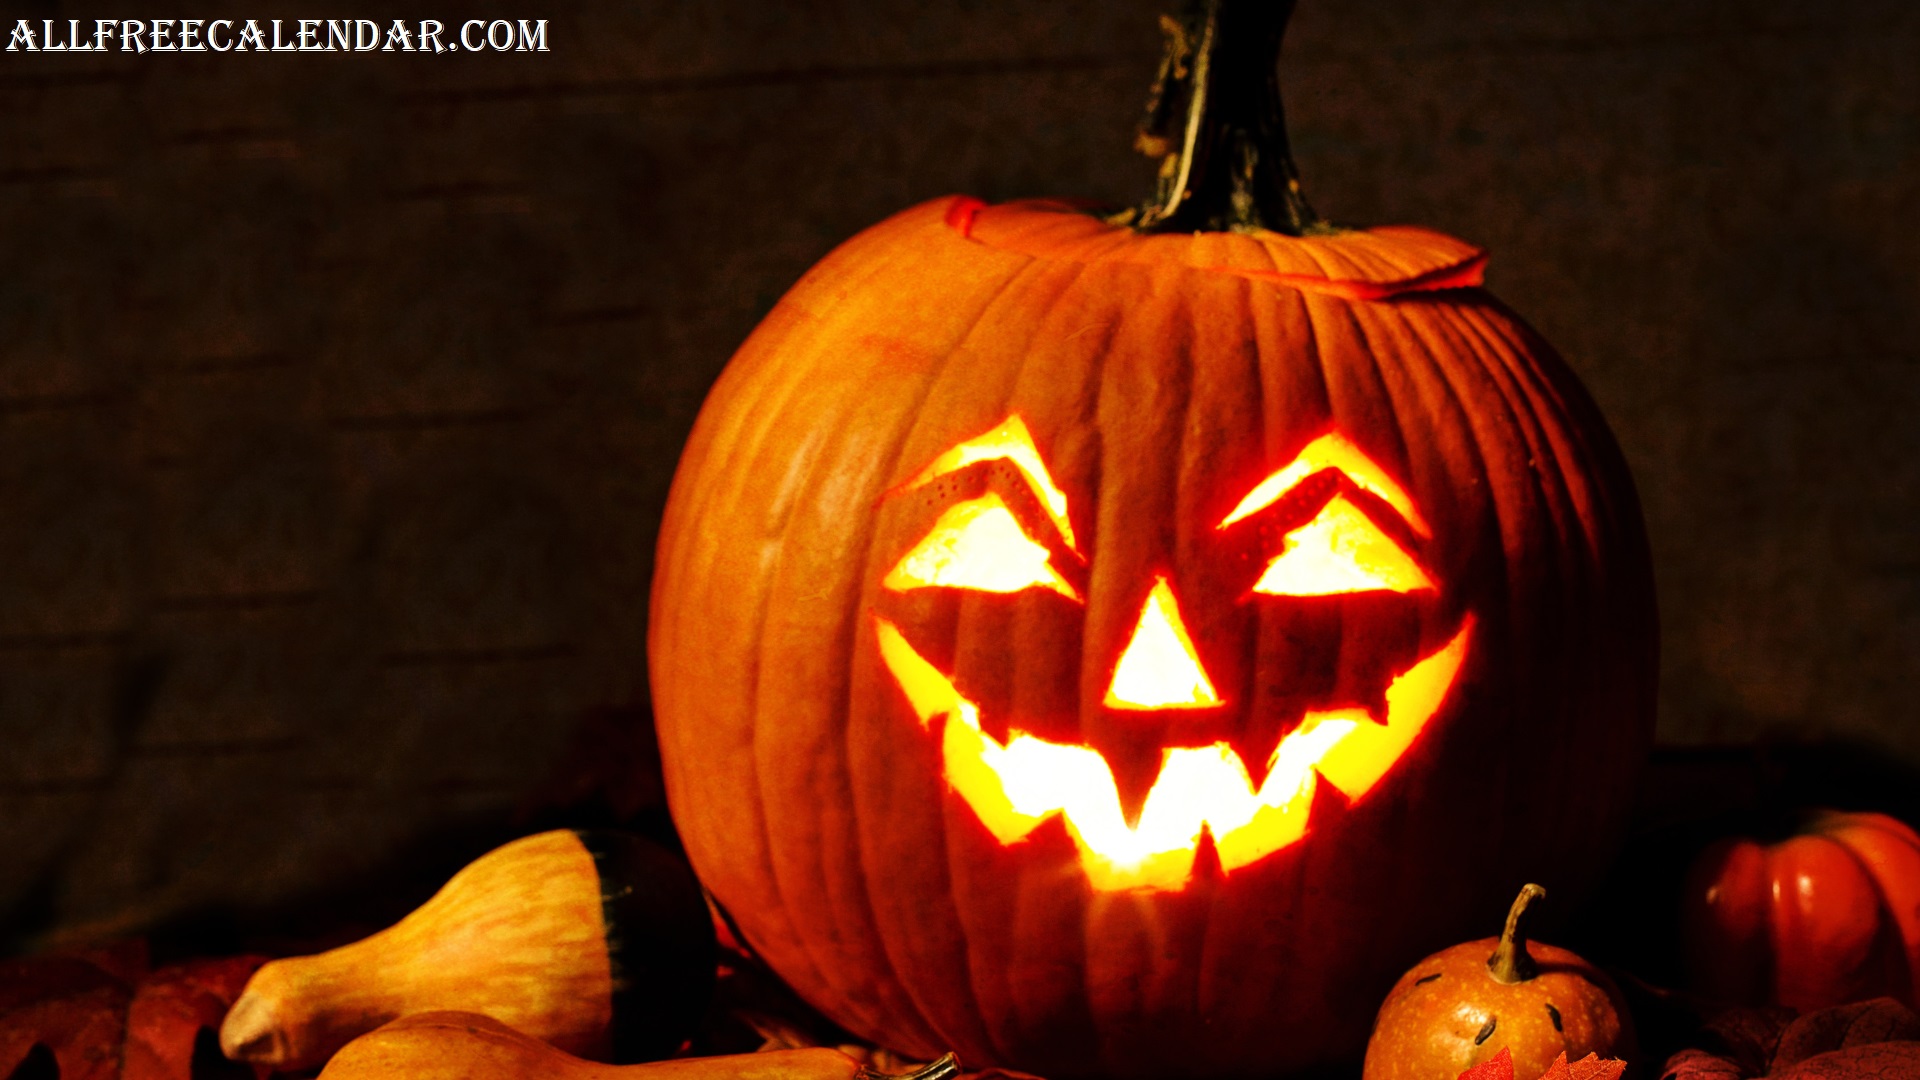 Spooky face pumpkin